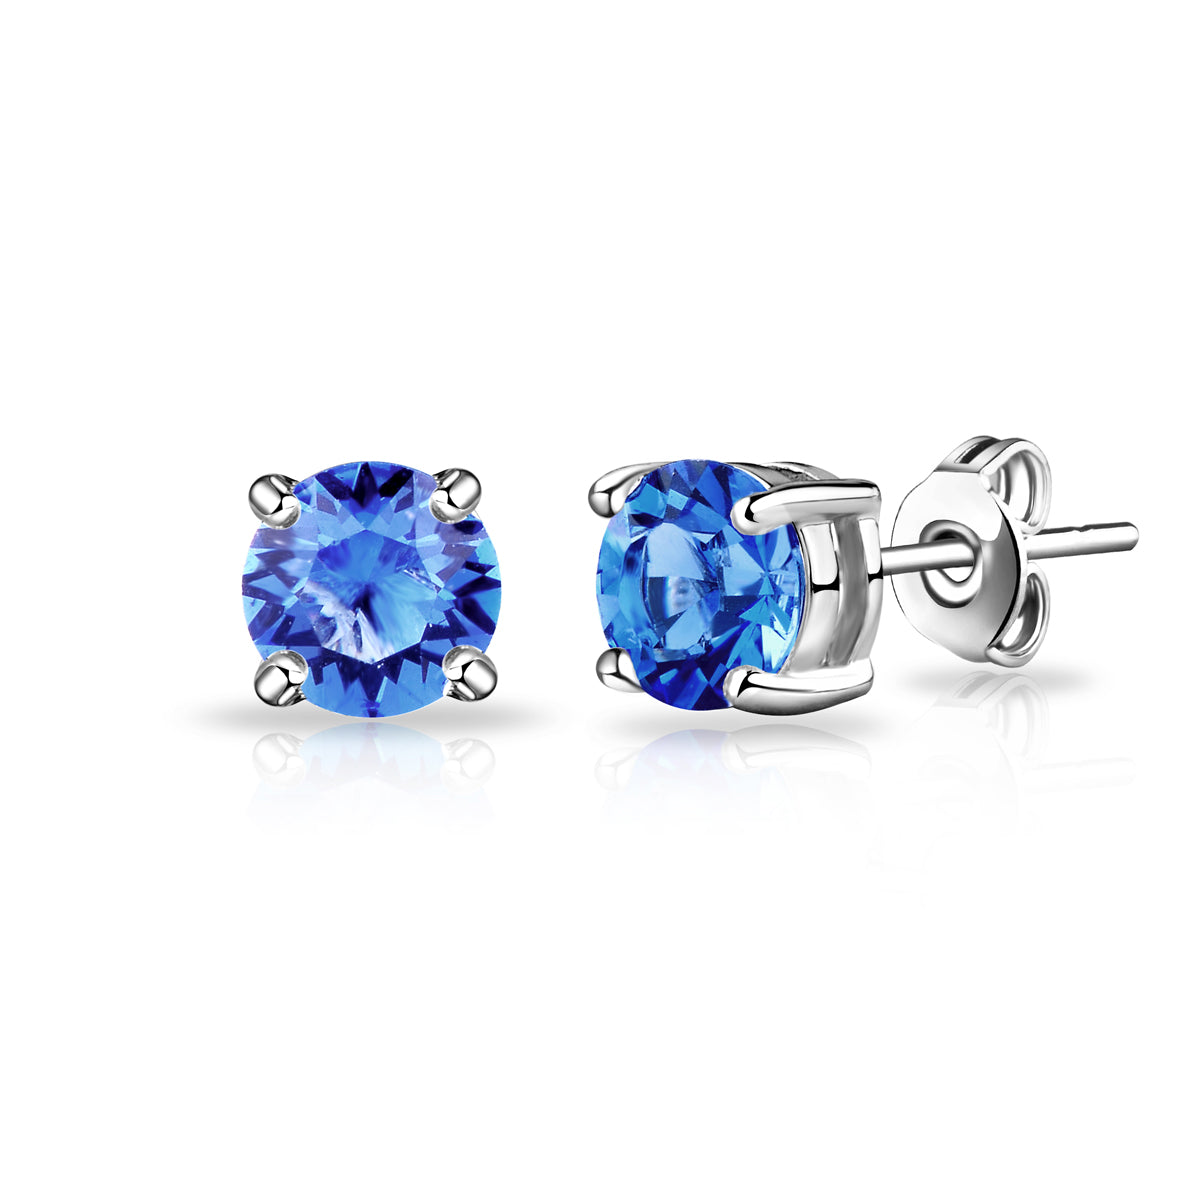 Dark Blue Stud Earrings Created with Zircondia® Crystals